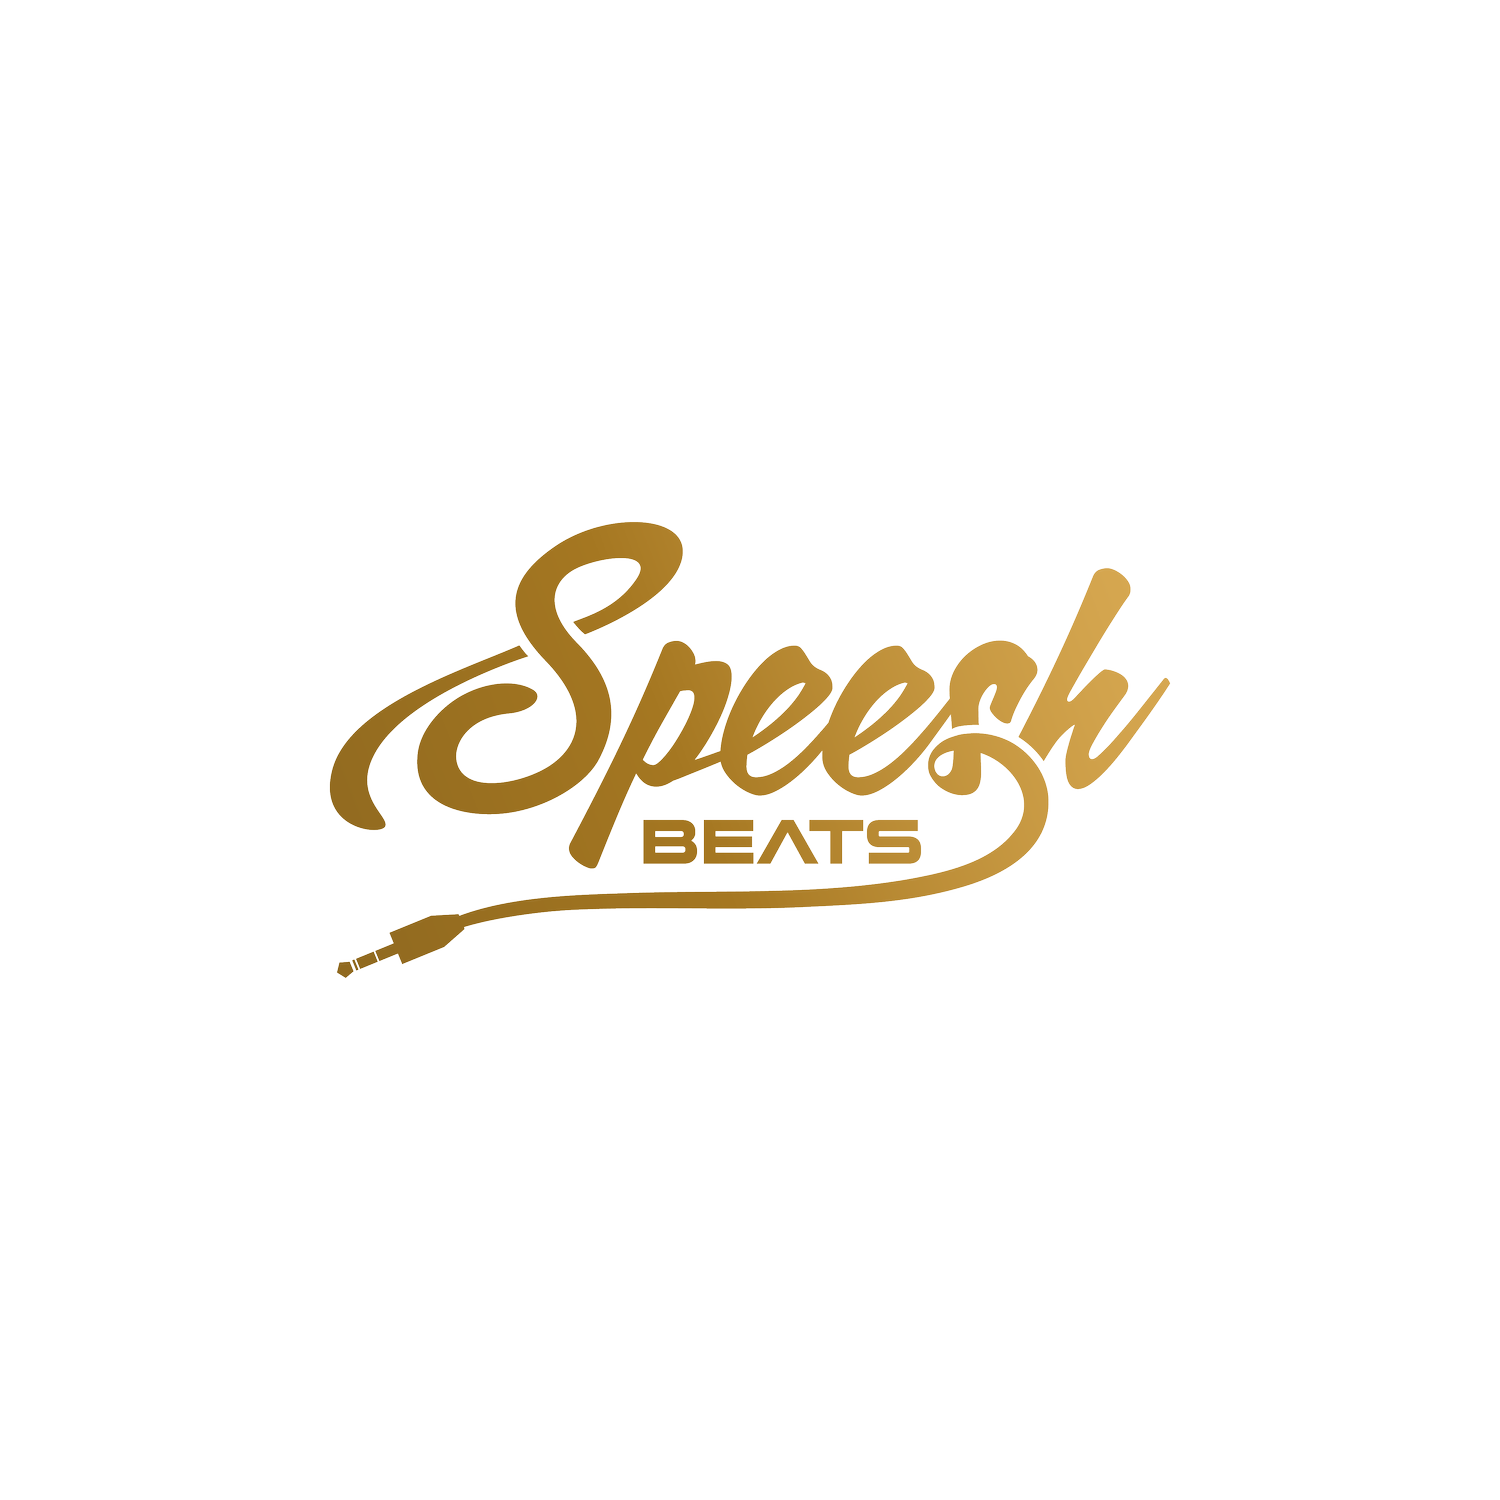 Speeshbeats.com